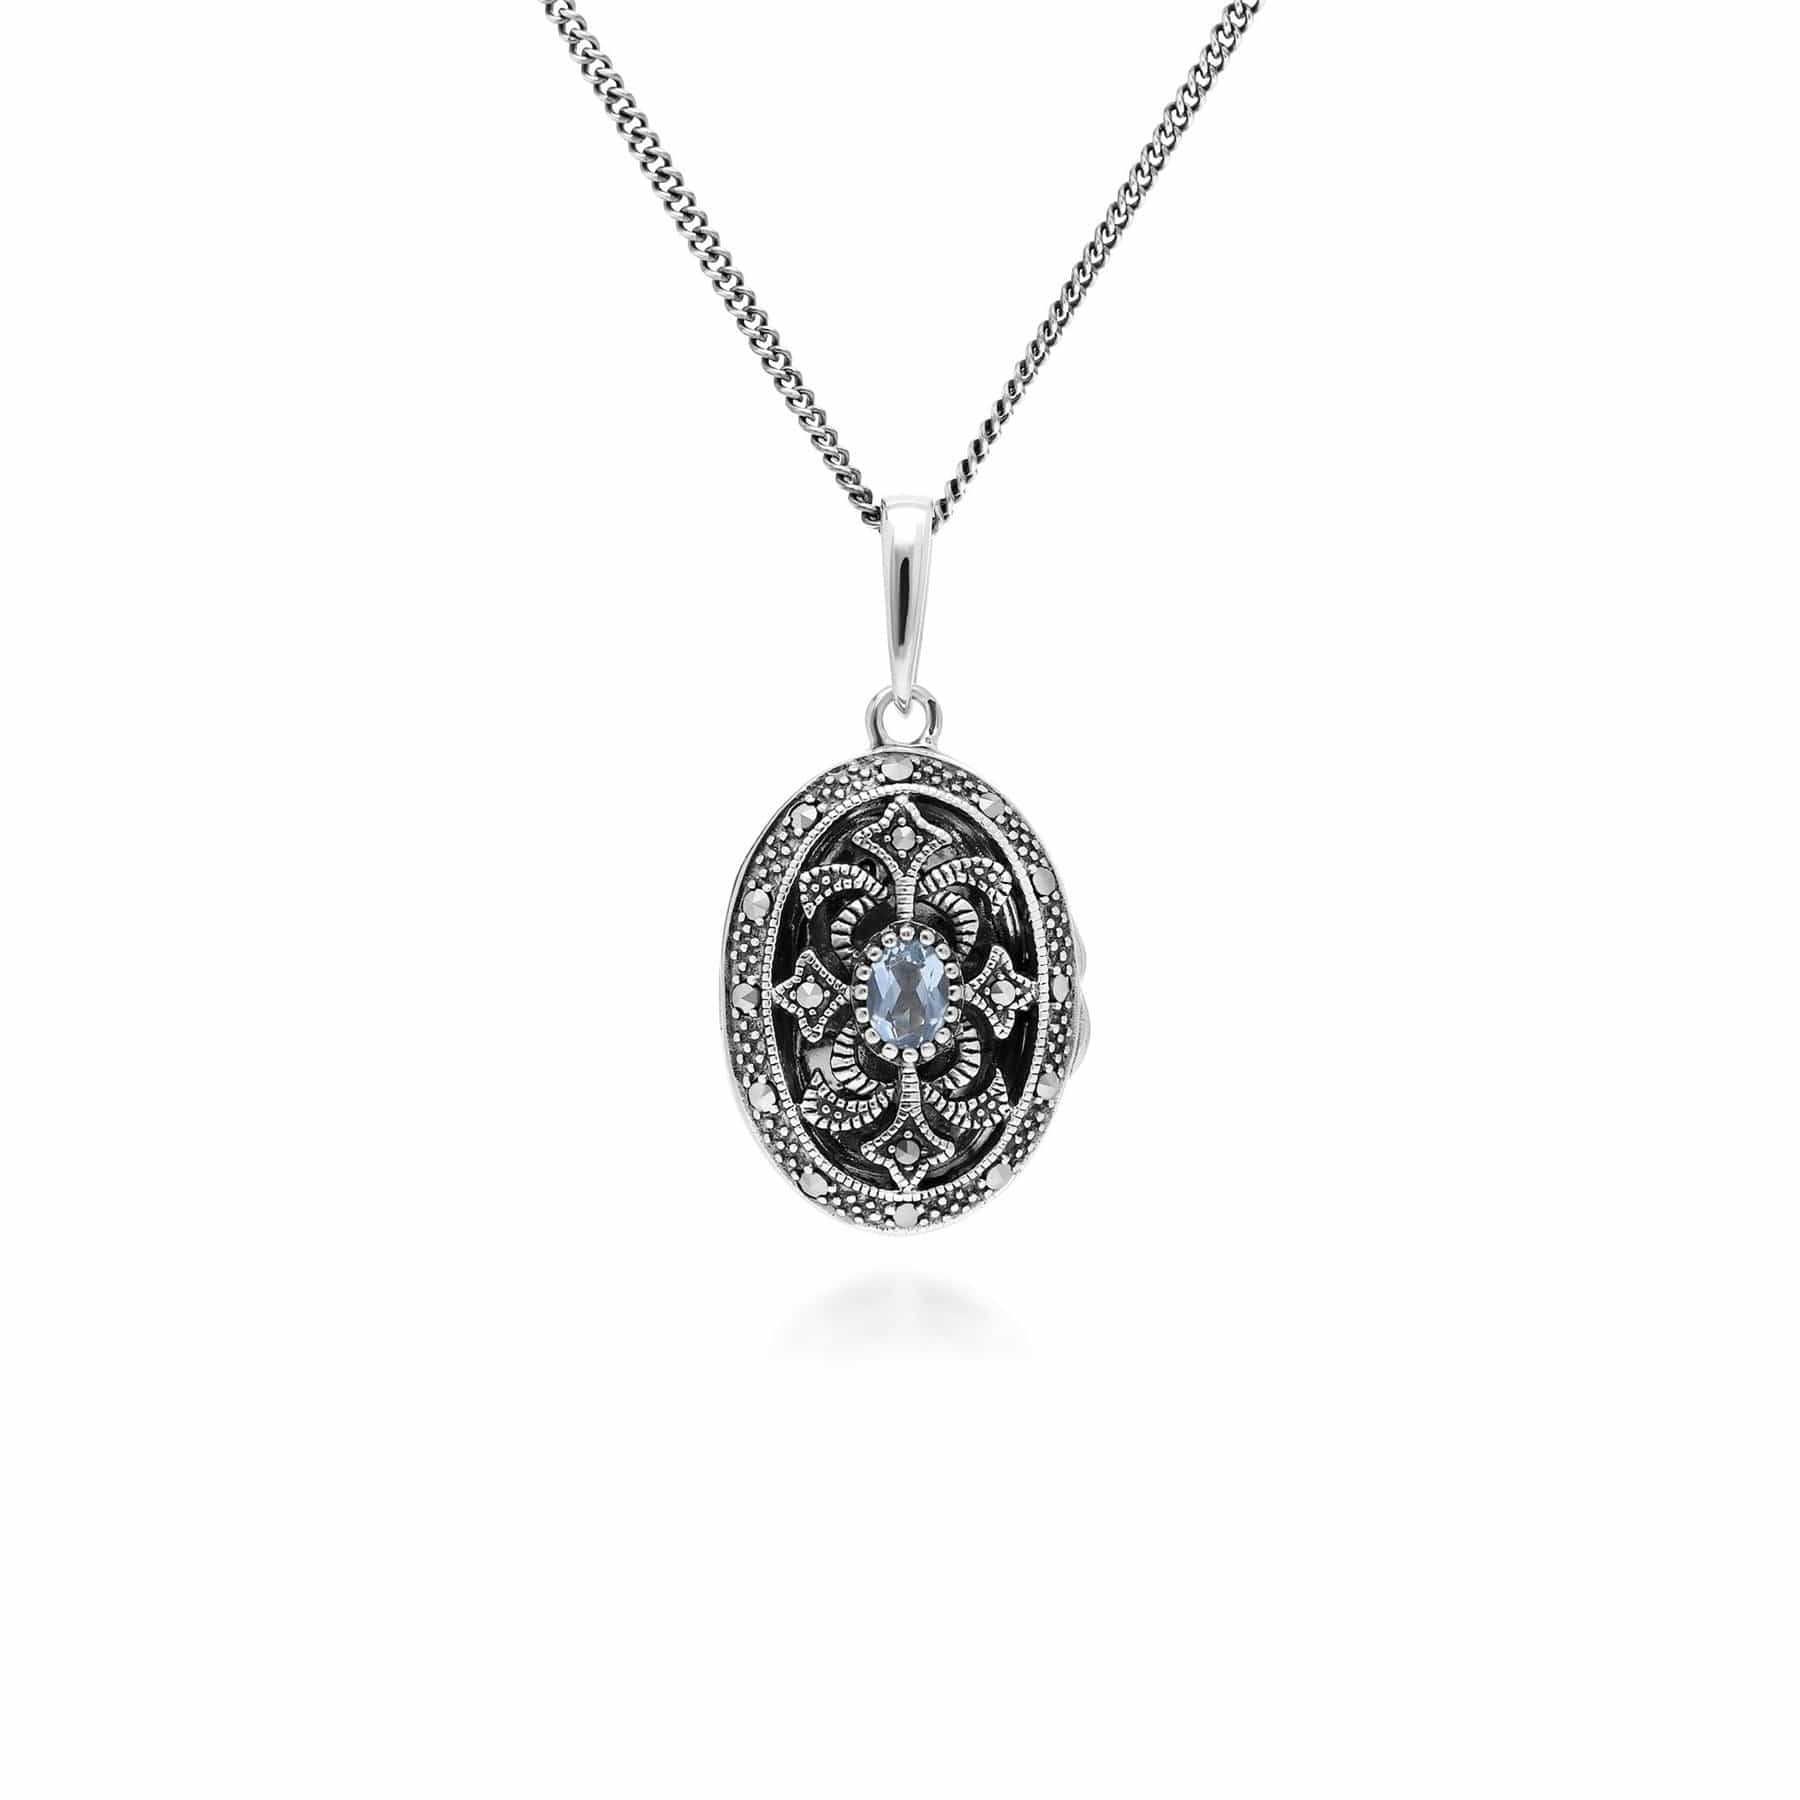 Art Nouveau Style Oval Topaz & Marcasite Locket Necklace in 925 Sterling Silver - Gemondo